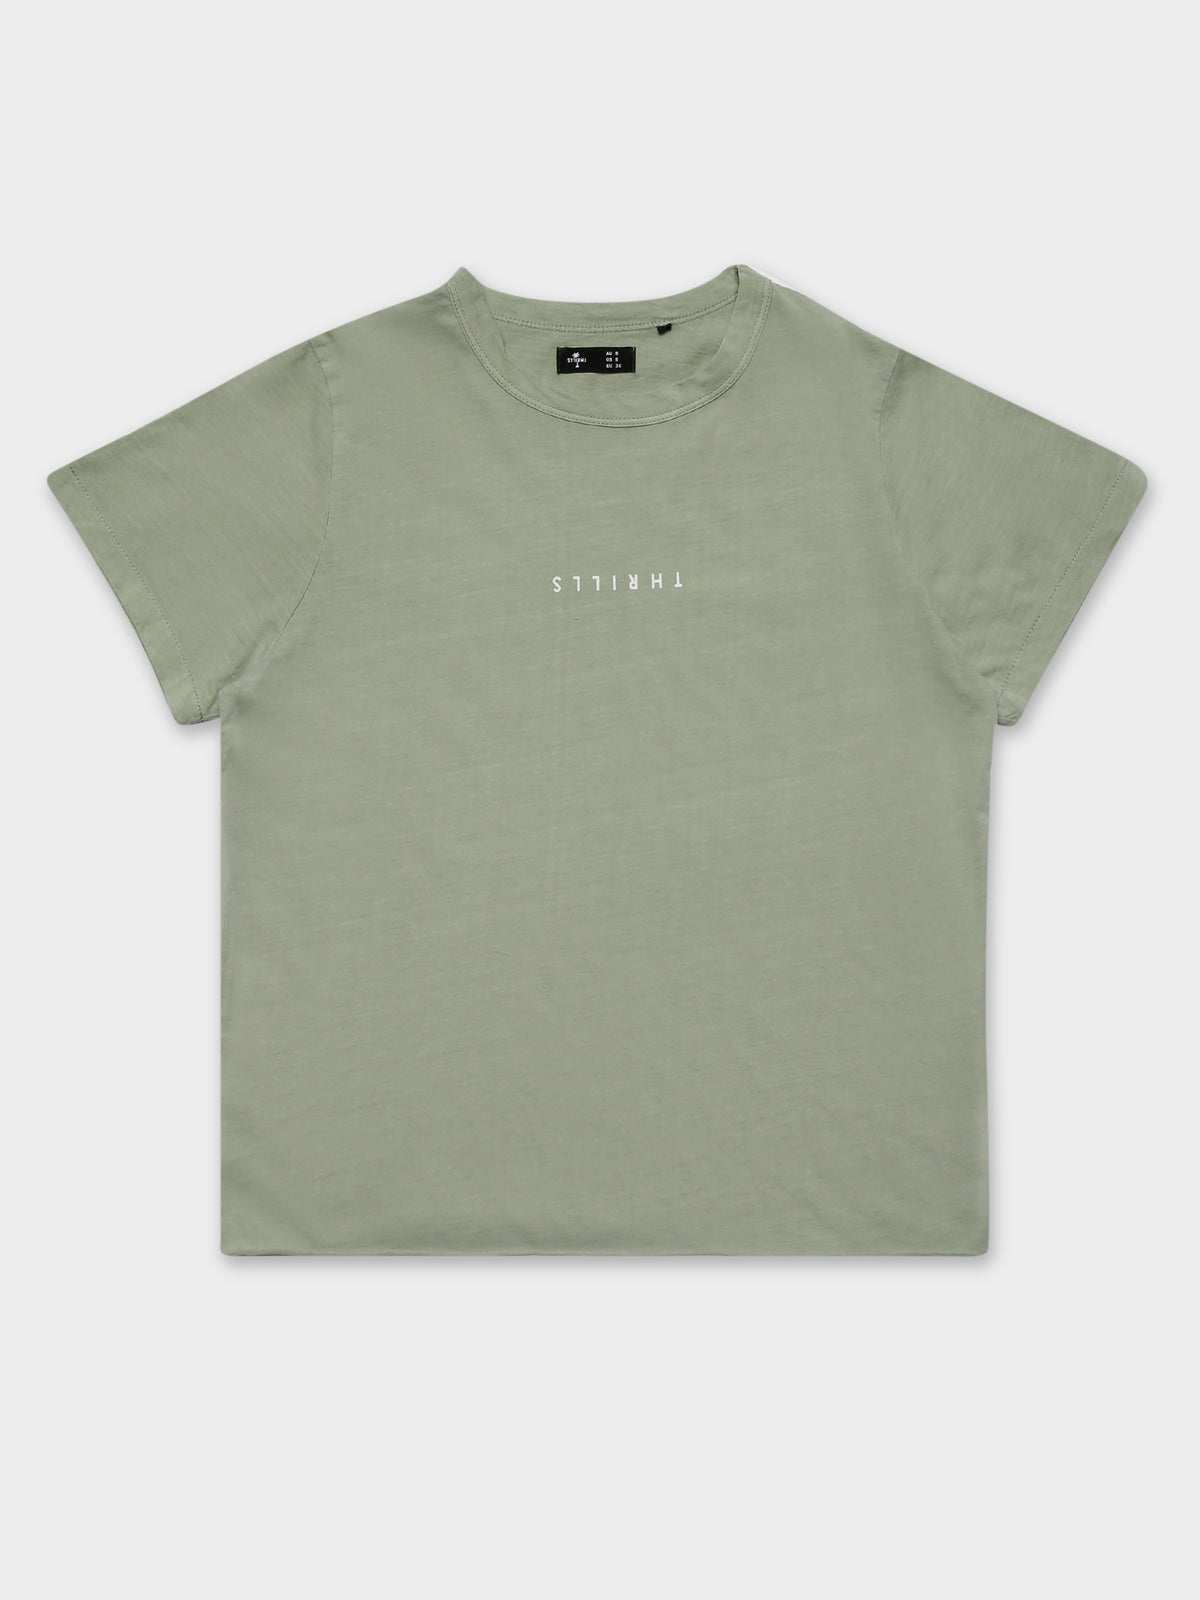 Minimal Thrills Relaxed T-Shirt in Eucalyptus Green